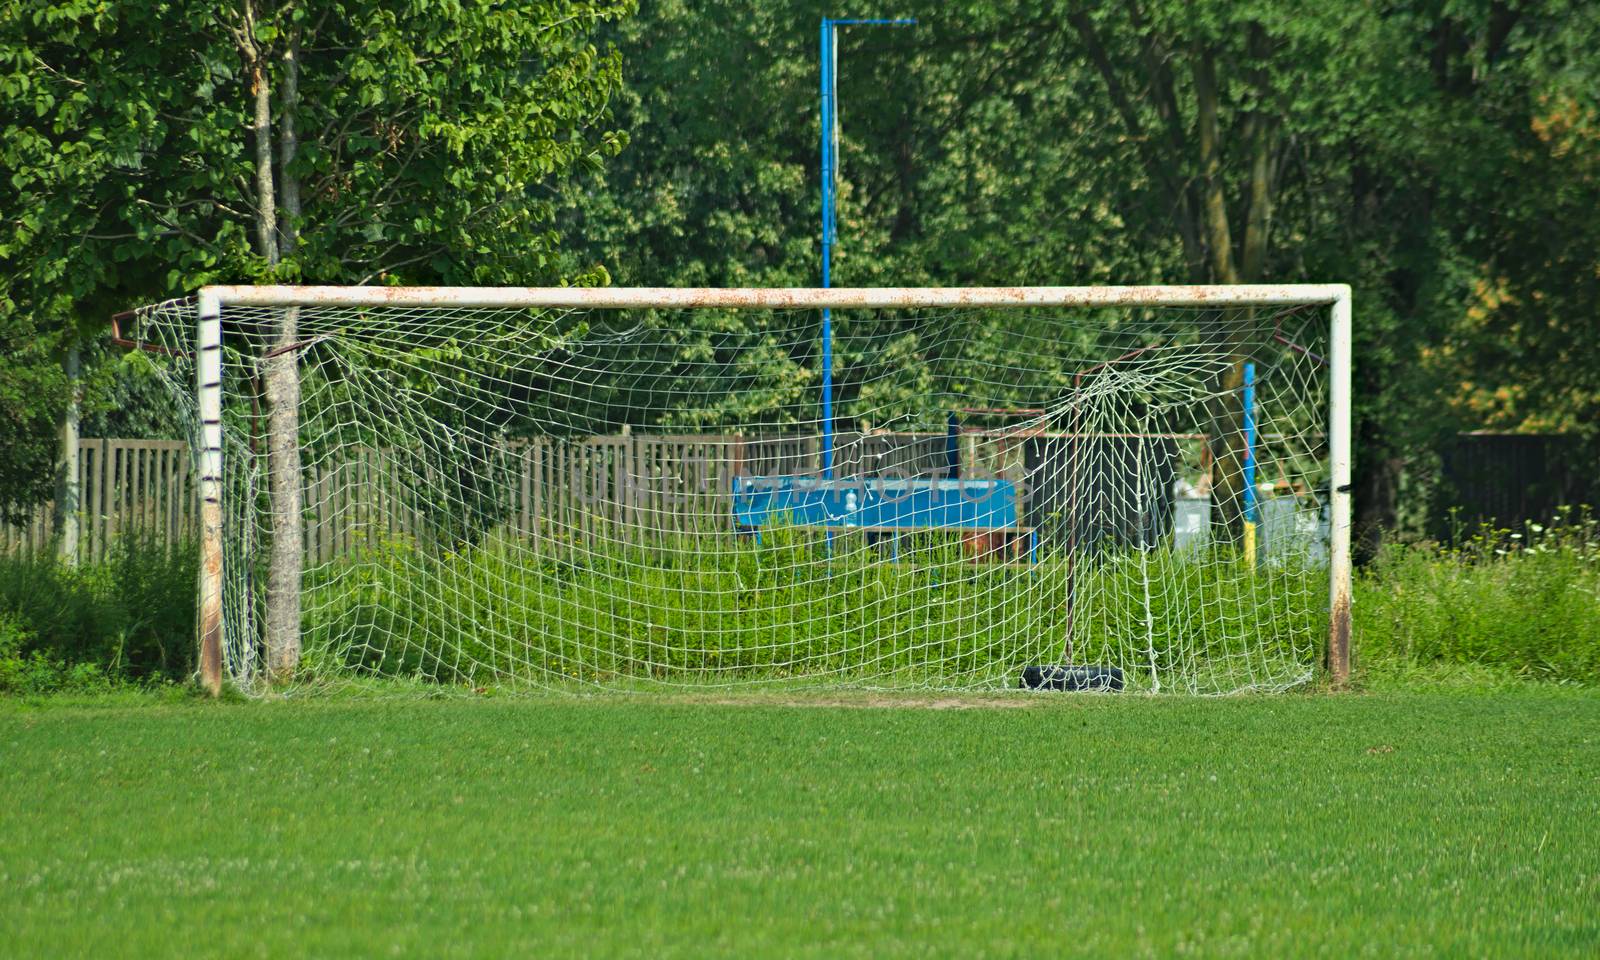 Rustic metal goal gate on football field